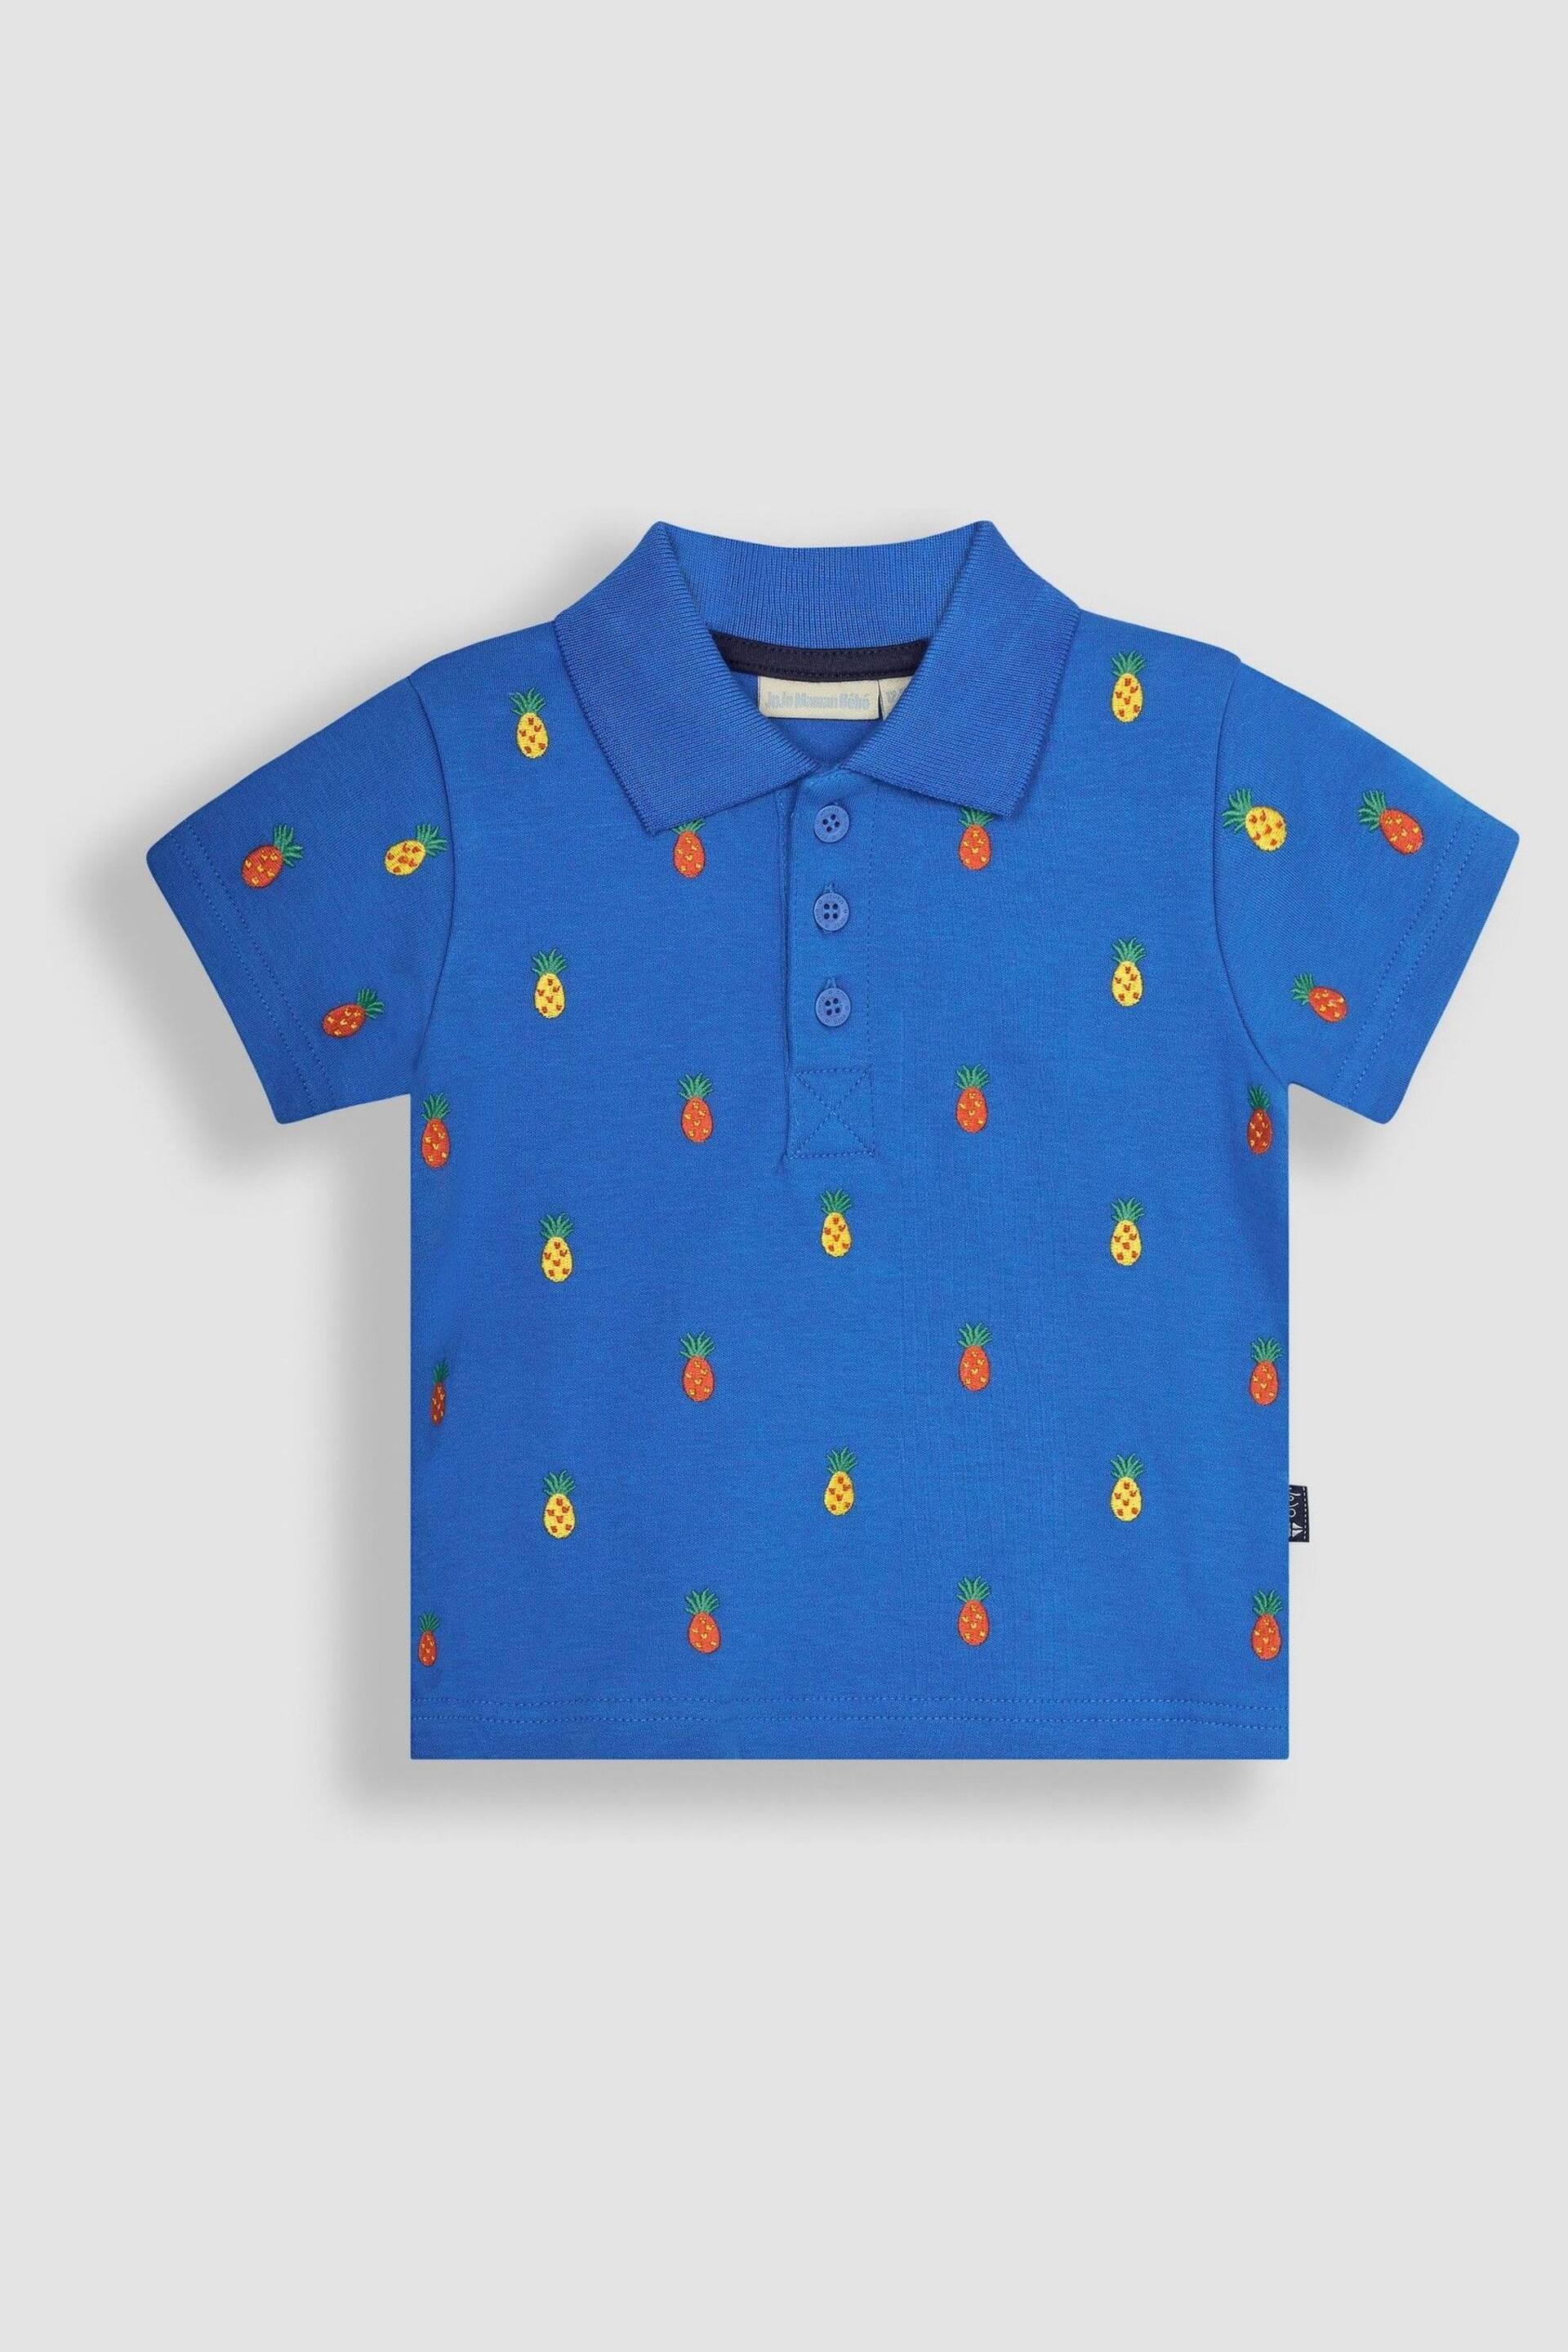 JoJo Maman Bébé Cobalt Blue Pineapple Embroidered Polo Shirt - Image 1 of 3